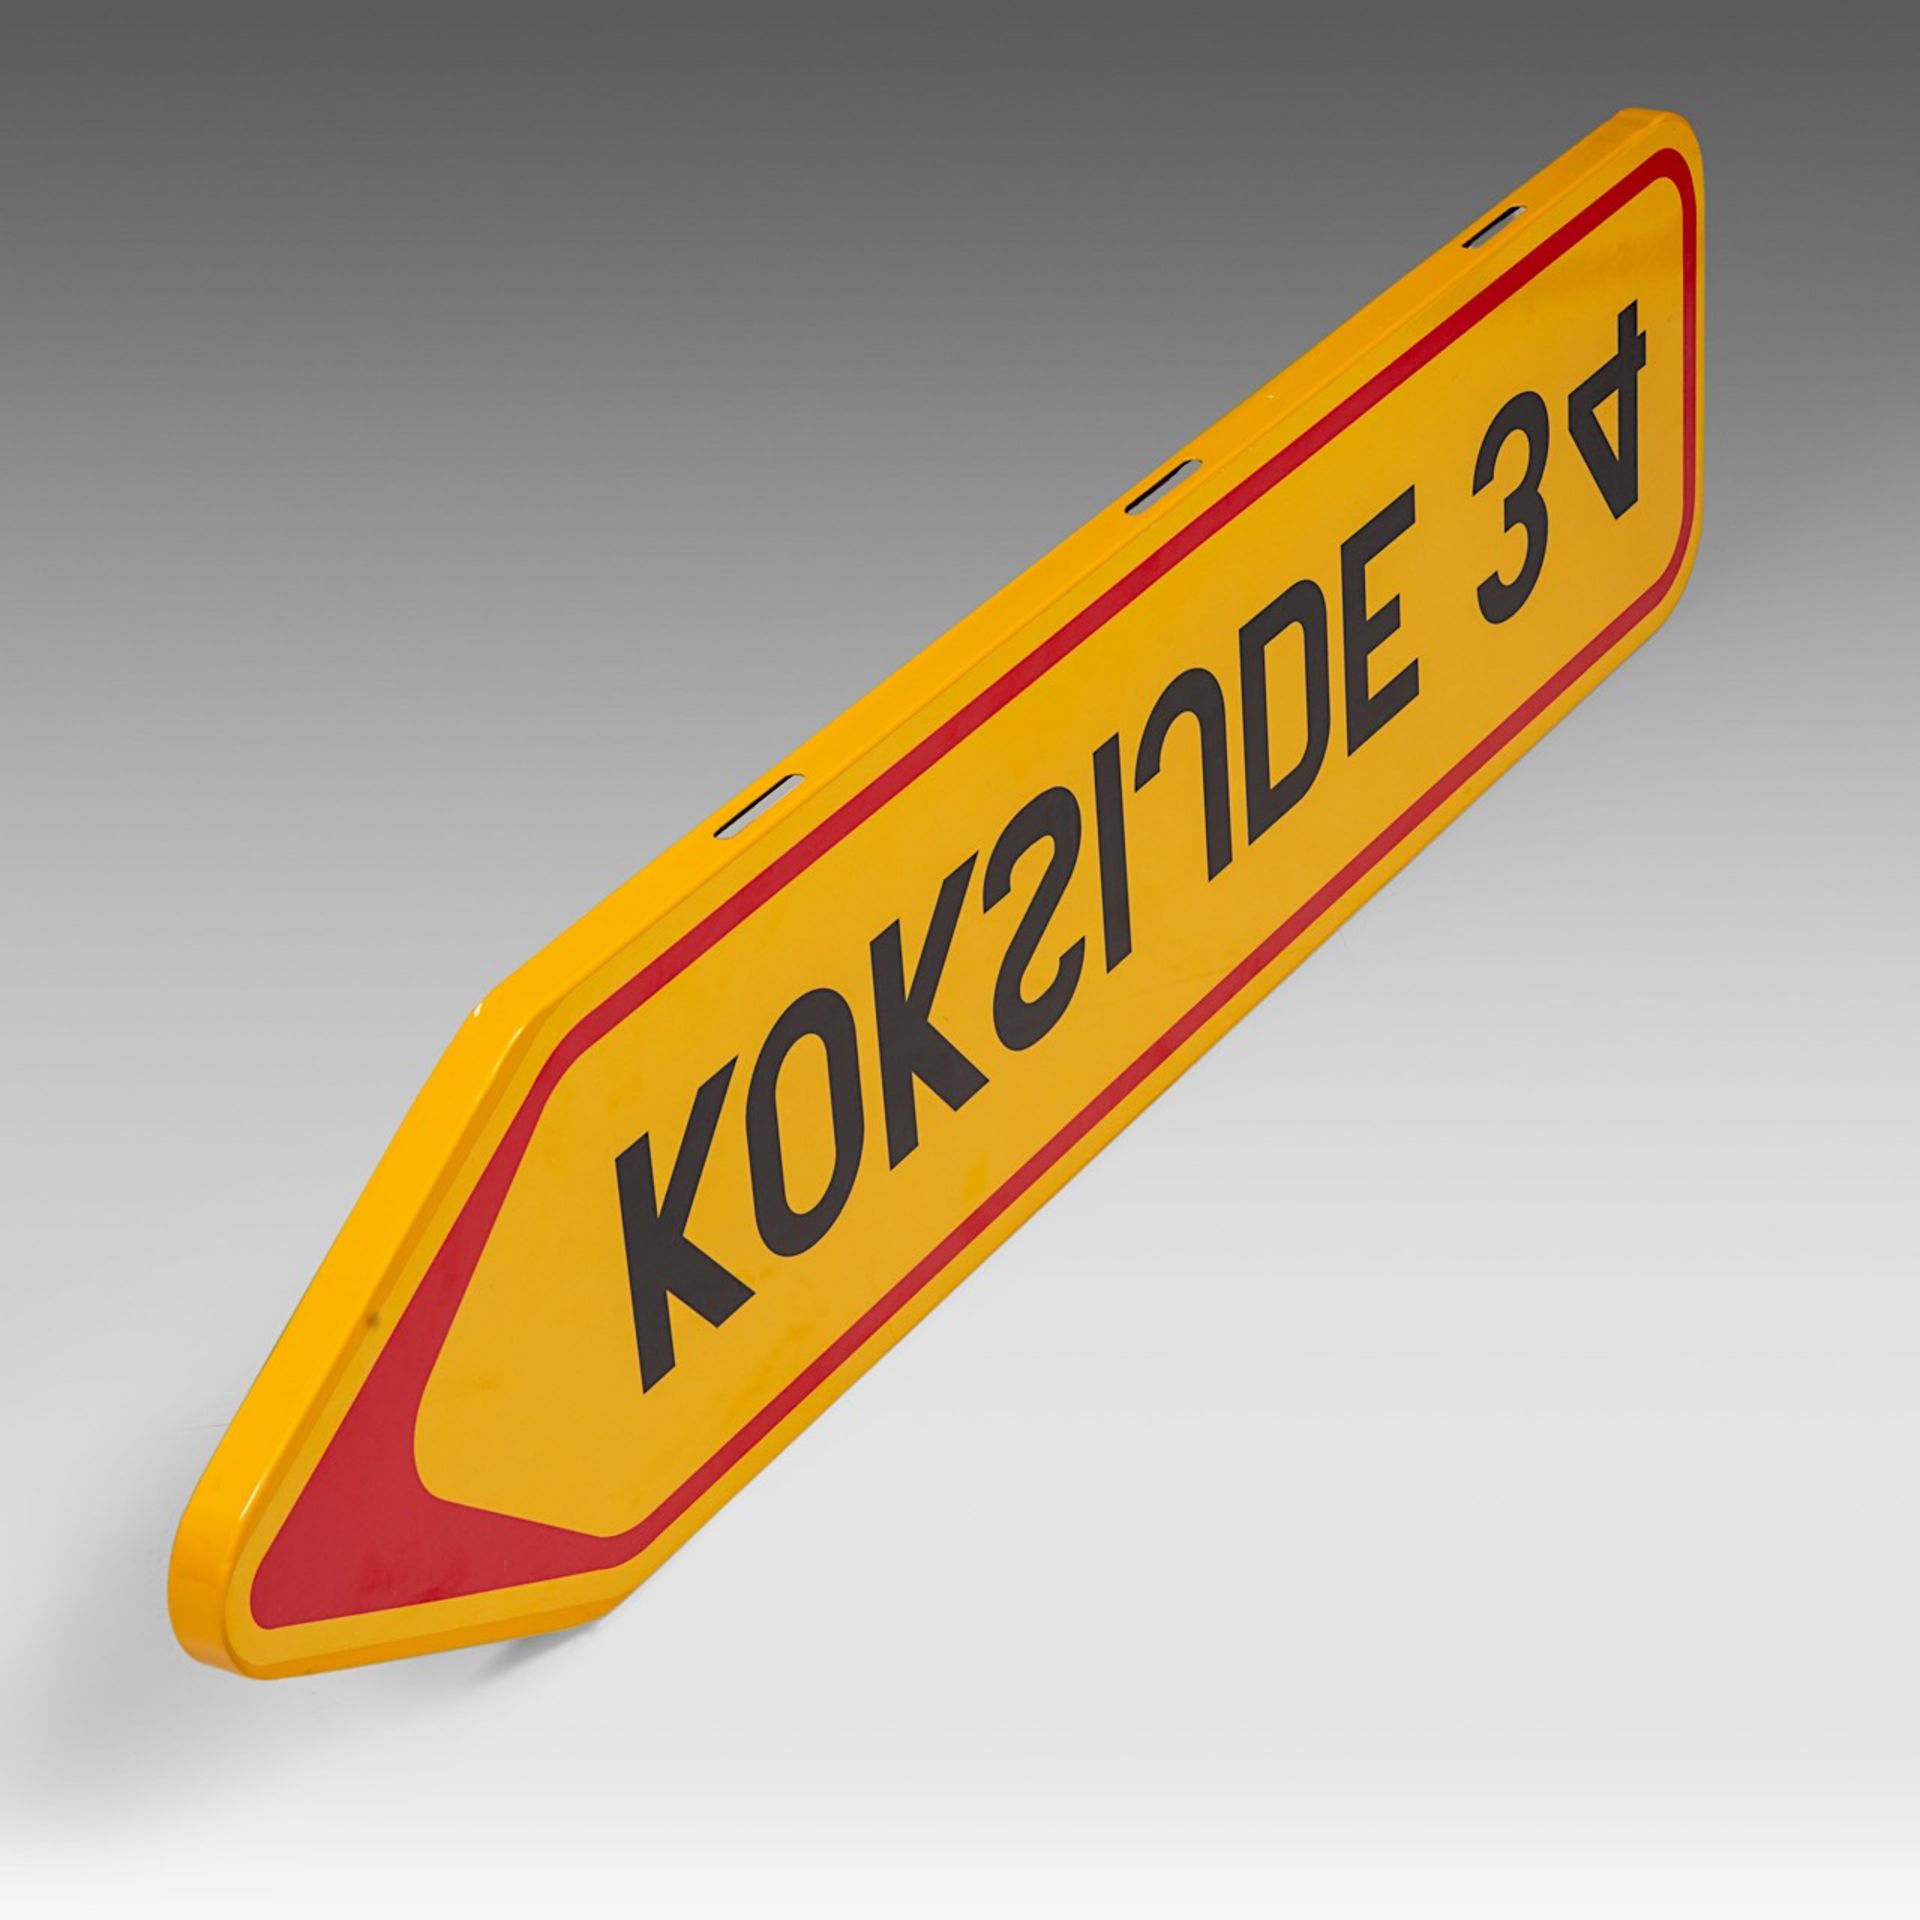 Joseph Willaert (1936-2014), 'Koksijde 34', 2006, road sign - Image 5 of 5